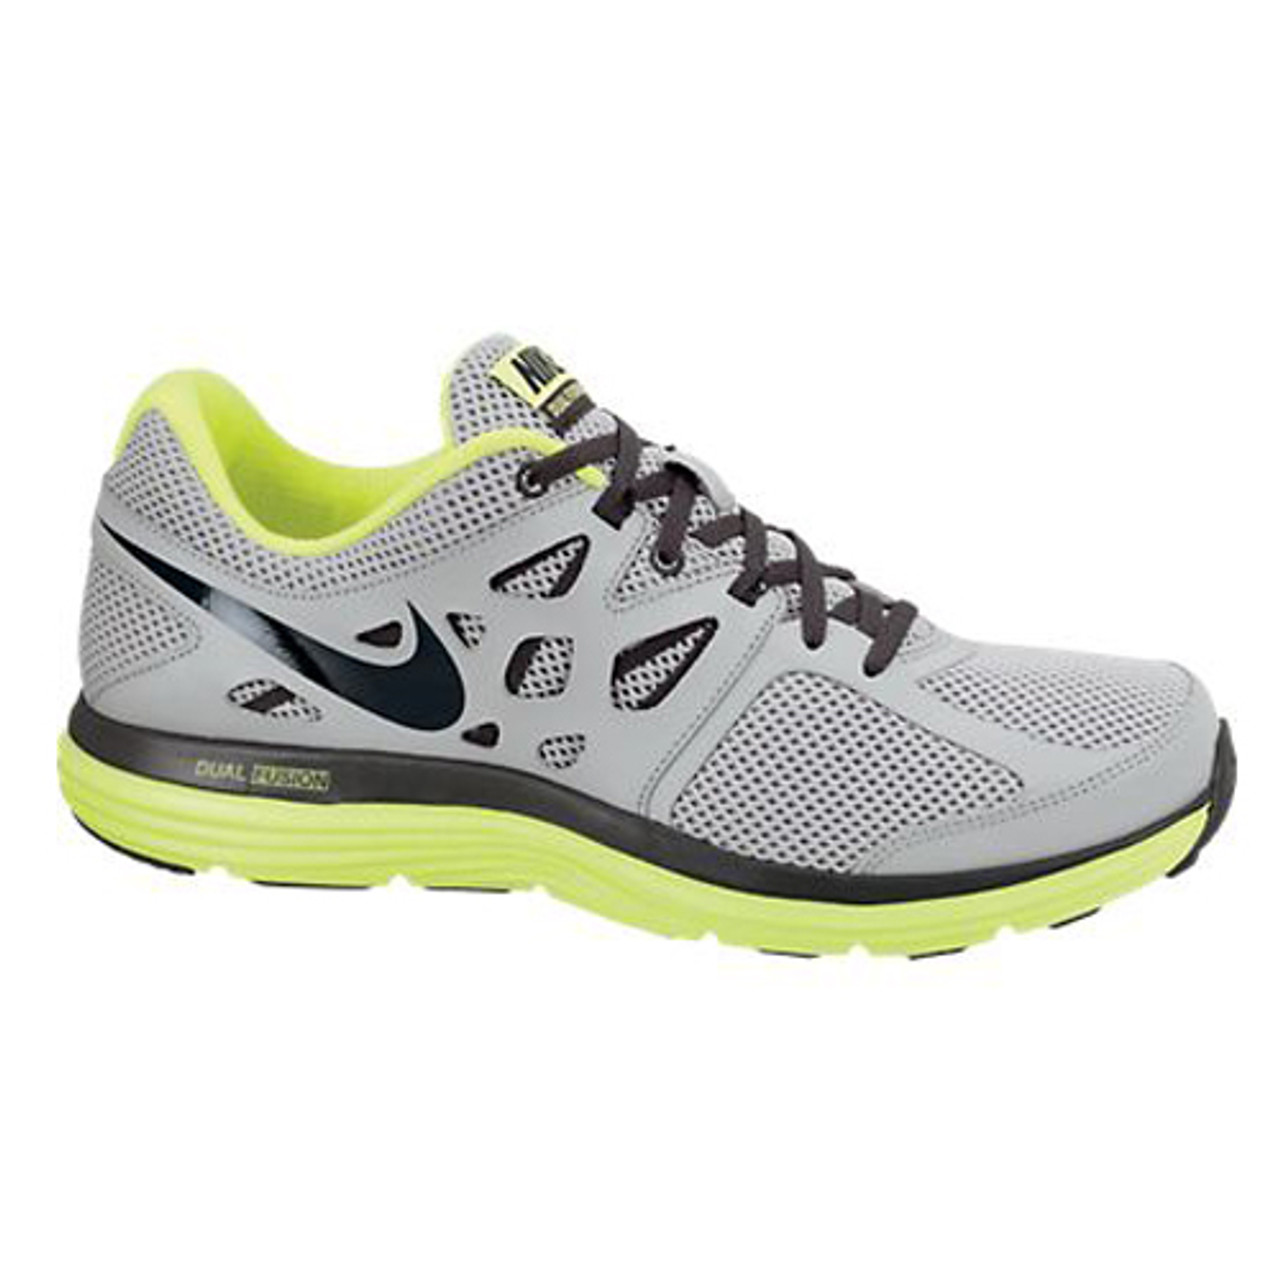 Nike Dual Fusion Lite Grey/Volt Mens Shoes - Grey/Dark Charcoal/Volt/Black | Discount Nike Men's Athletic & More - Shoolu.com |